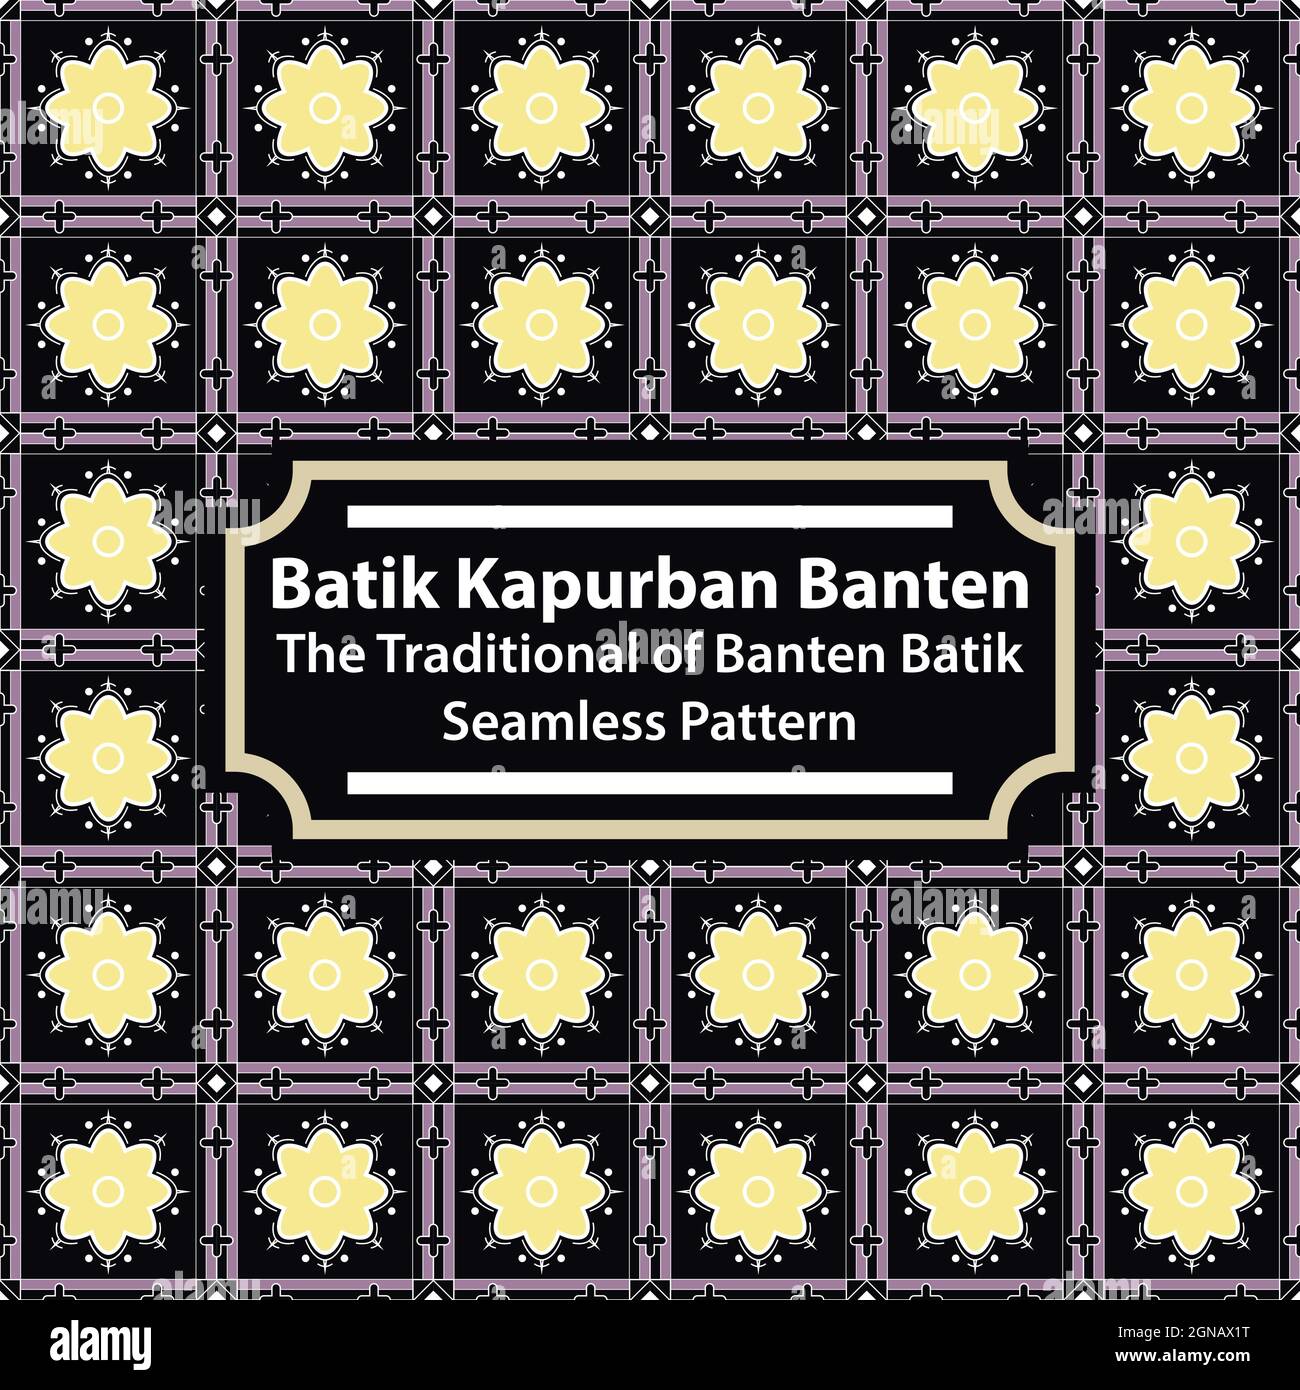 Batik Kapurban Banten - The Traditional of Banten Batik Seamless Pattern Stock Vector